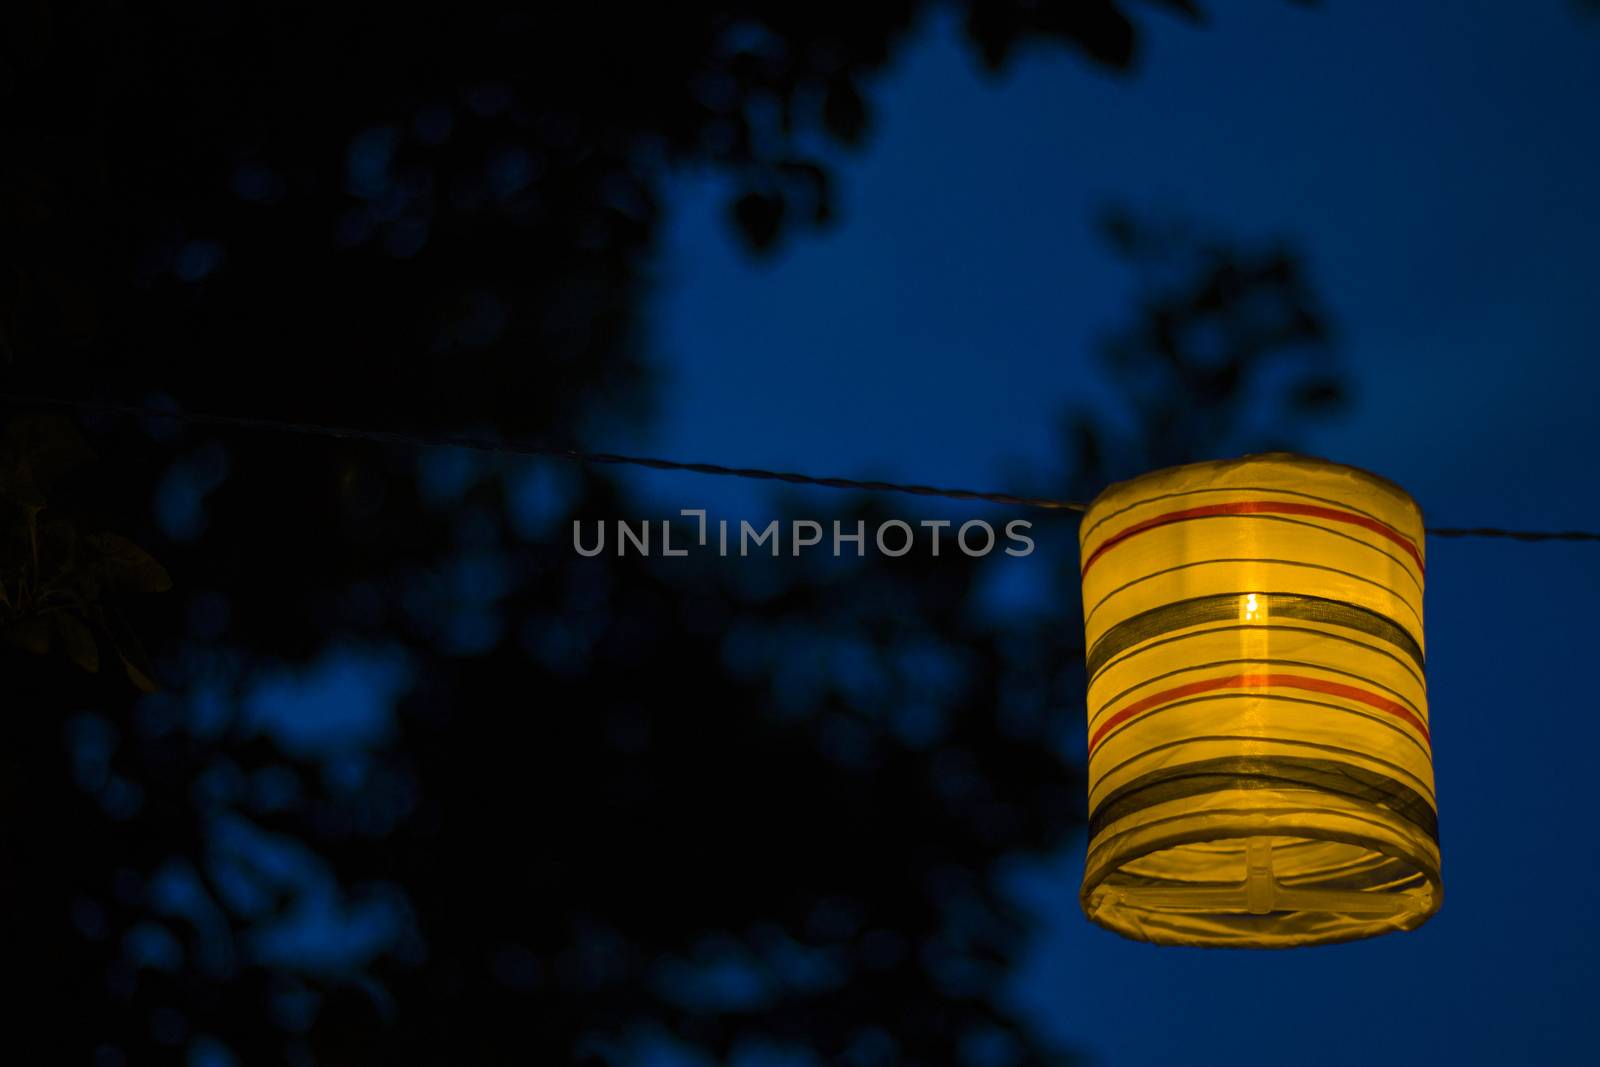 Lantern in the yard, night and warm light, hanging lanterns by Taidundua